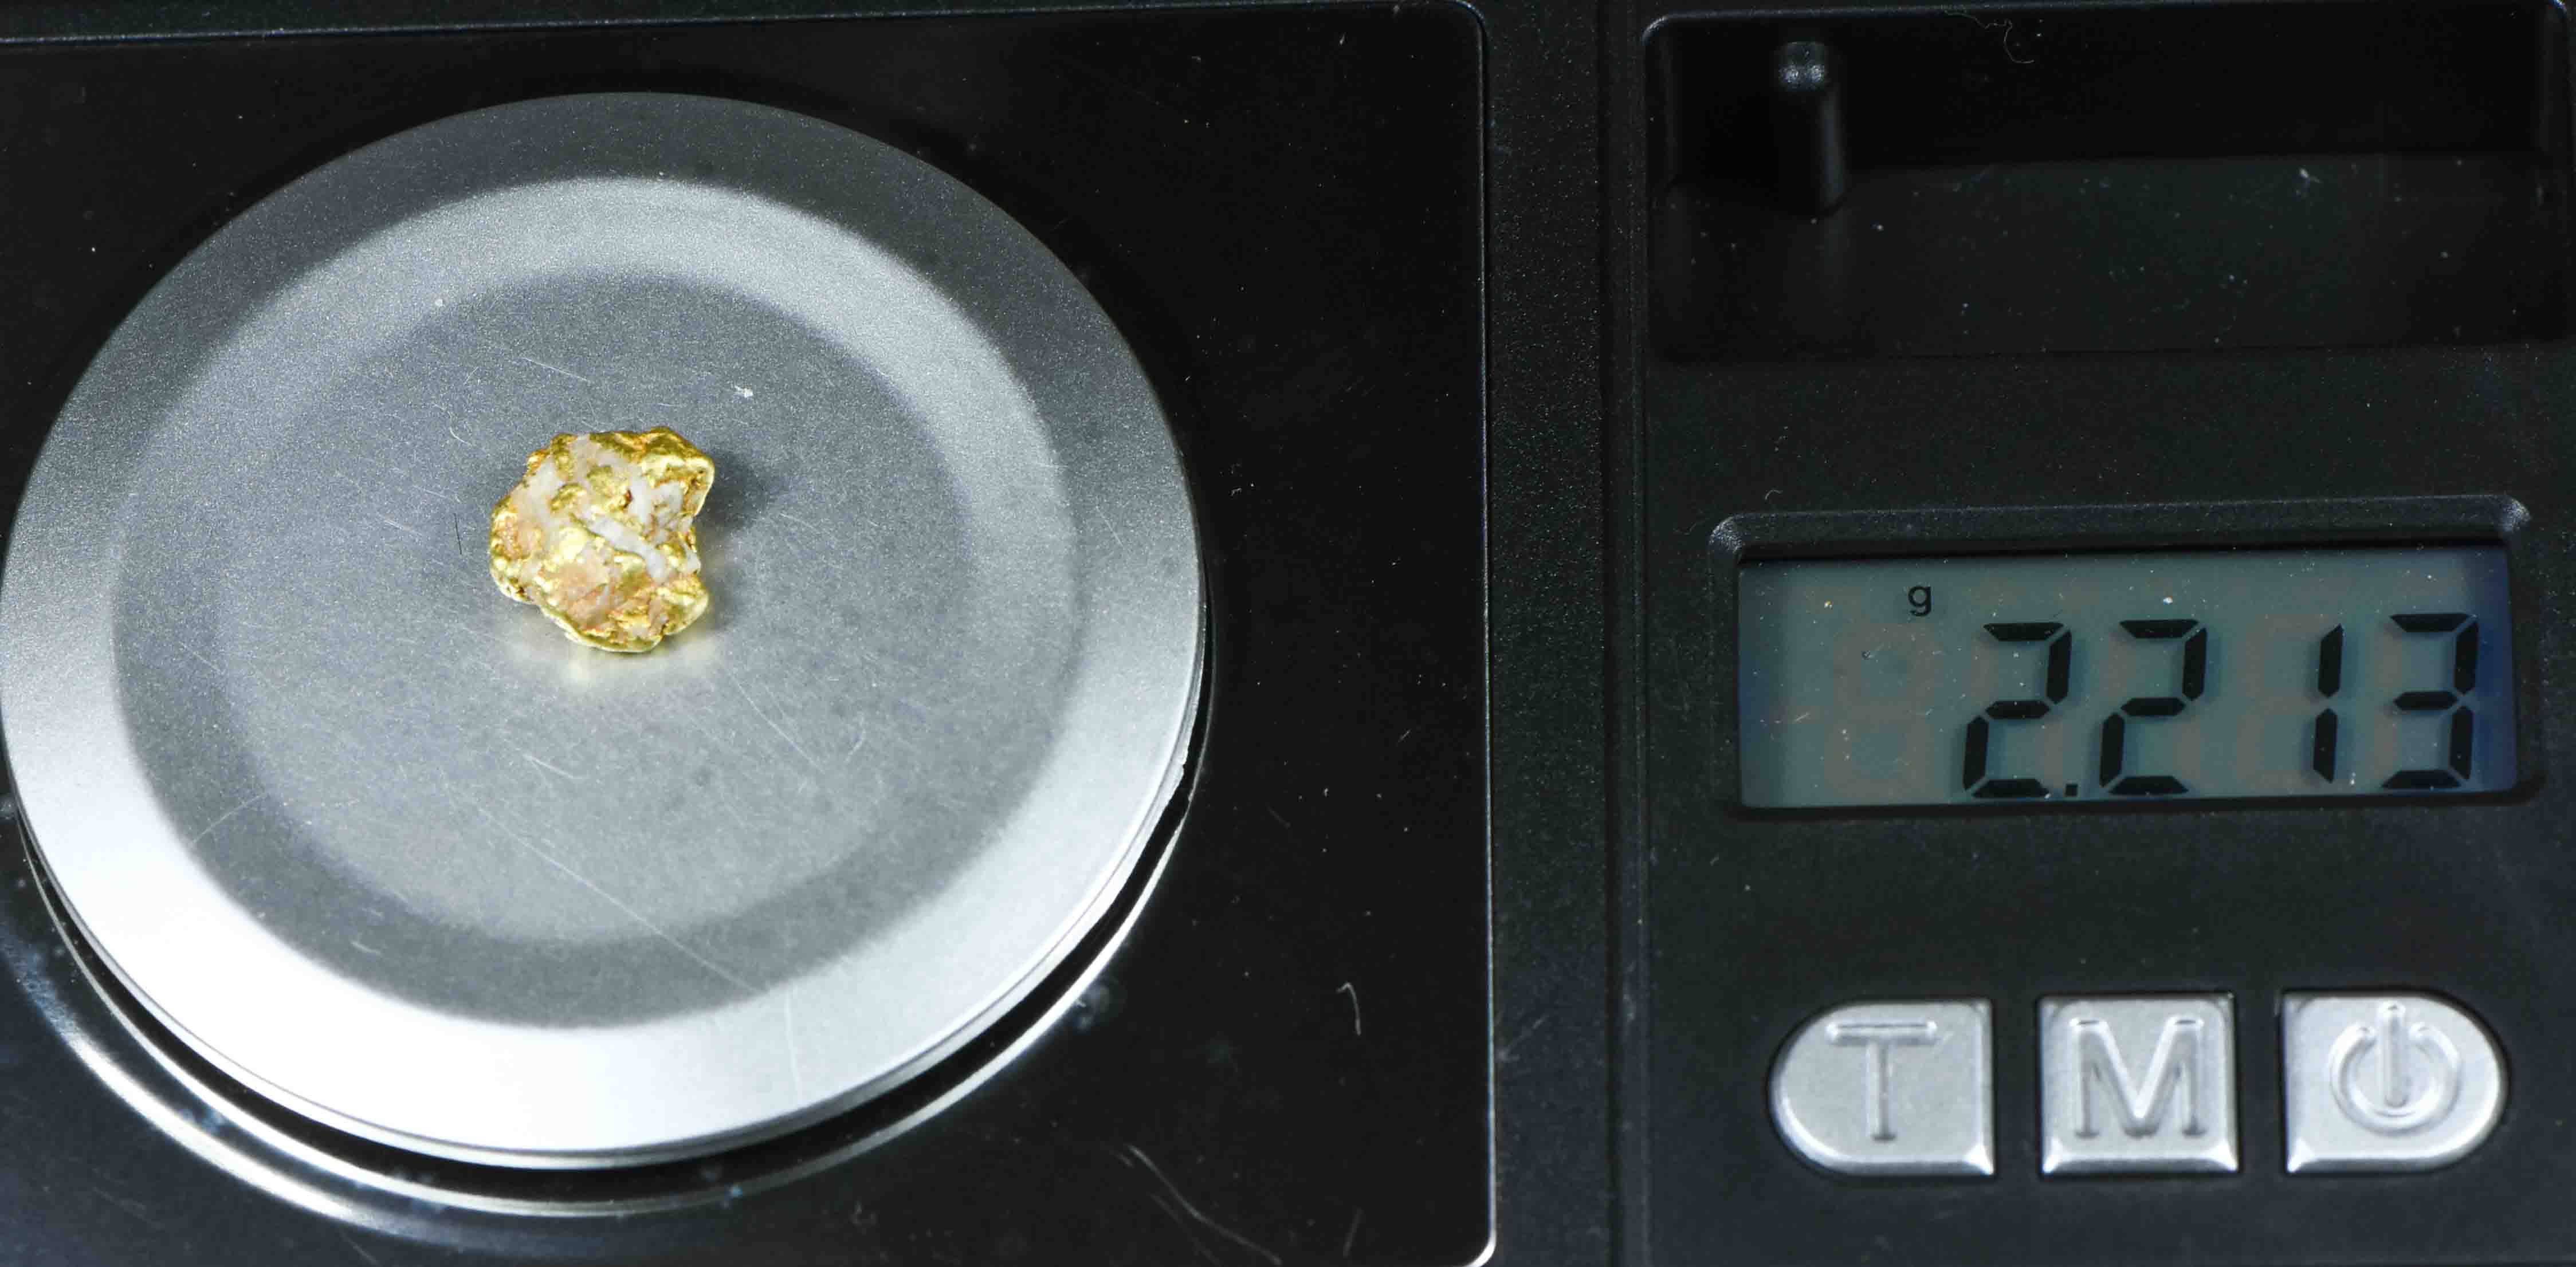 QN-30 "Alaskan BC Gold Nuggets with Quartz" Genuine 2.21 Grams